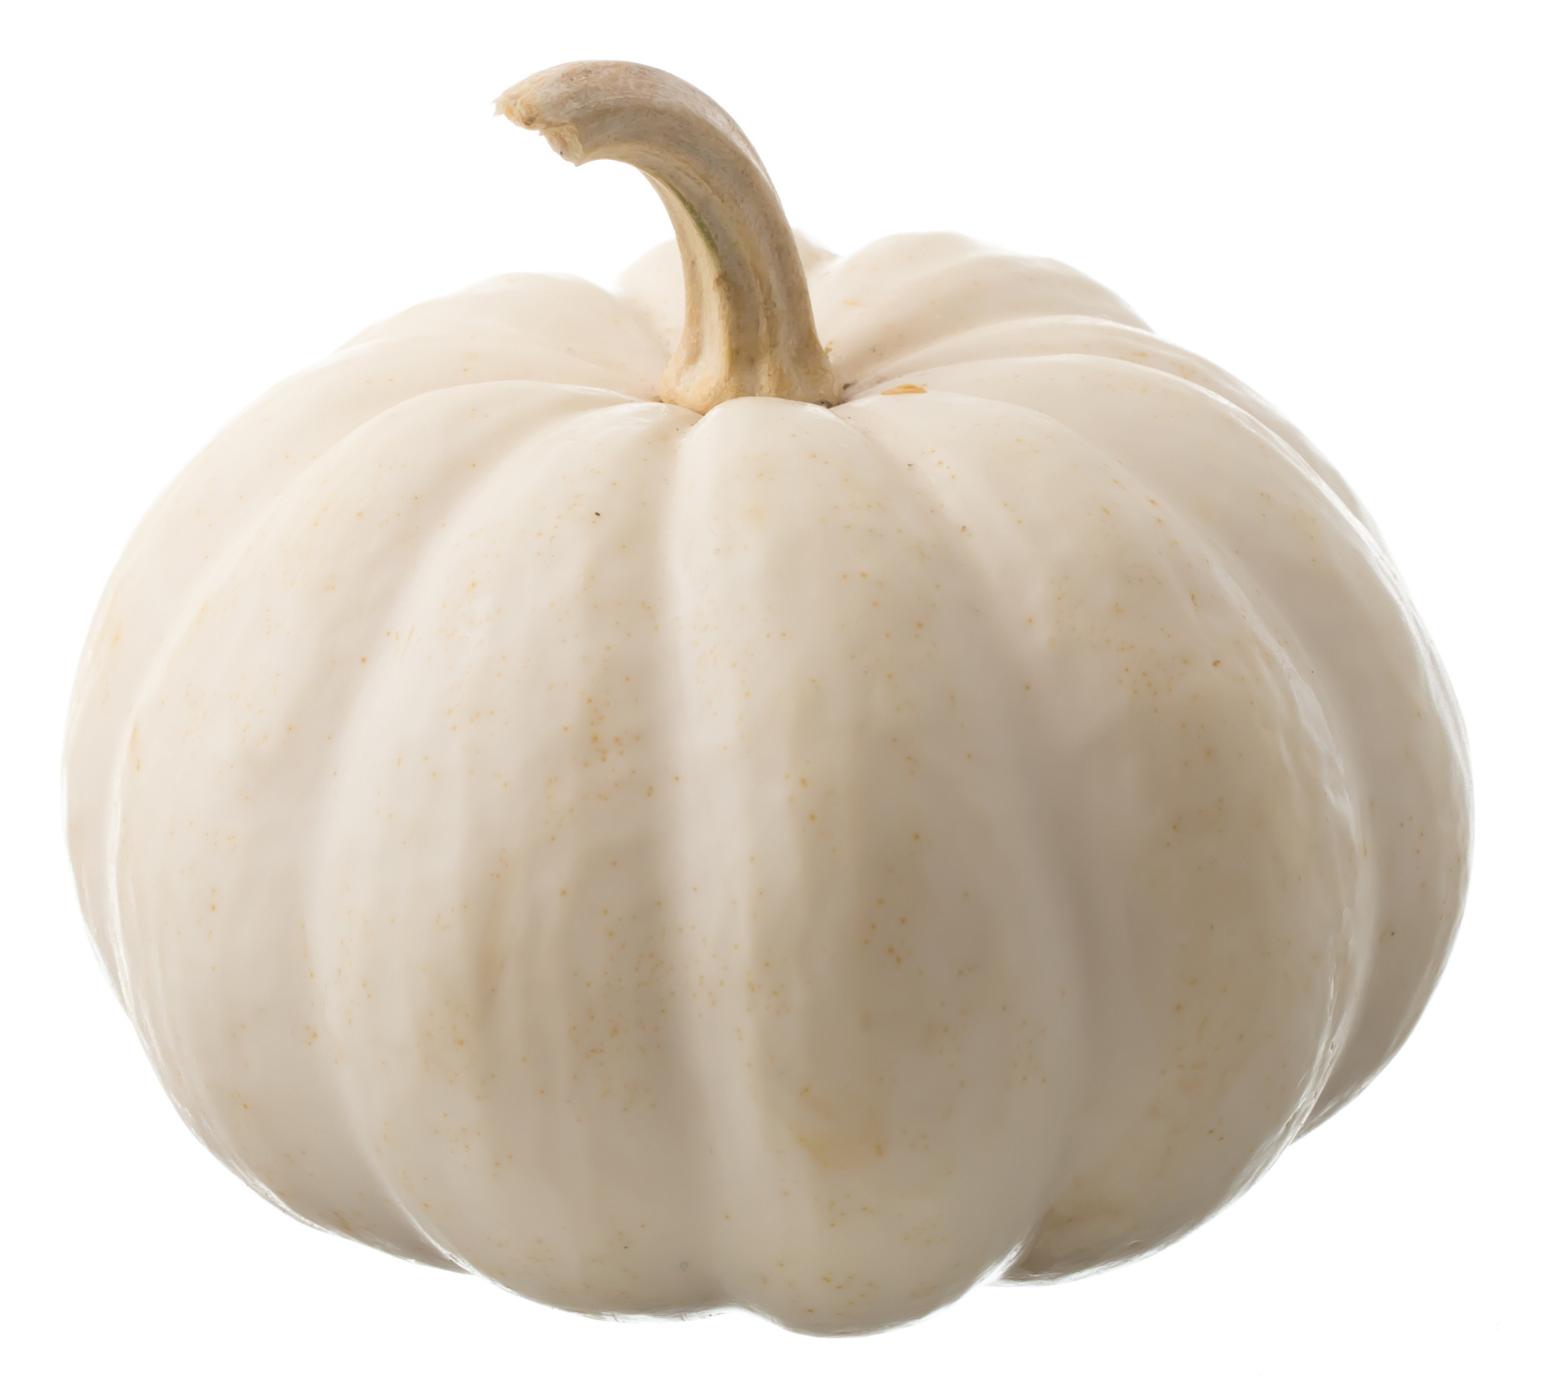 H-E-B Texas Roots White Pumpkin; image 1 of 2